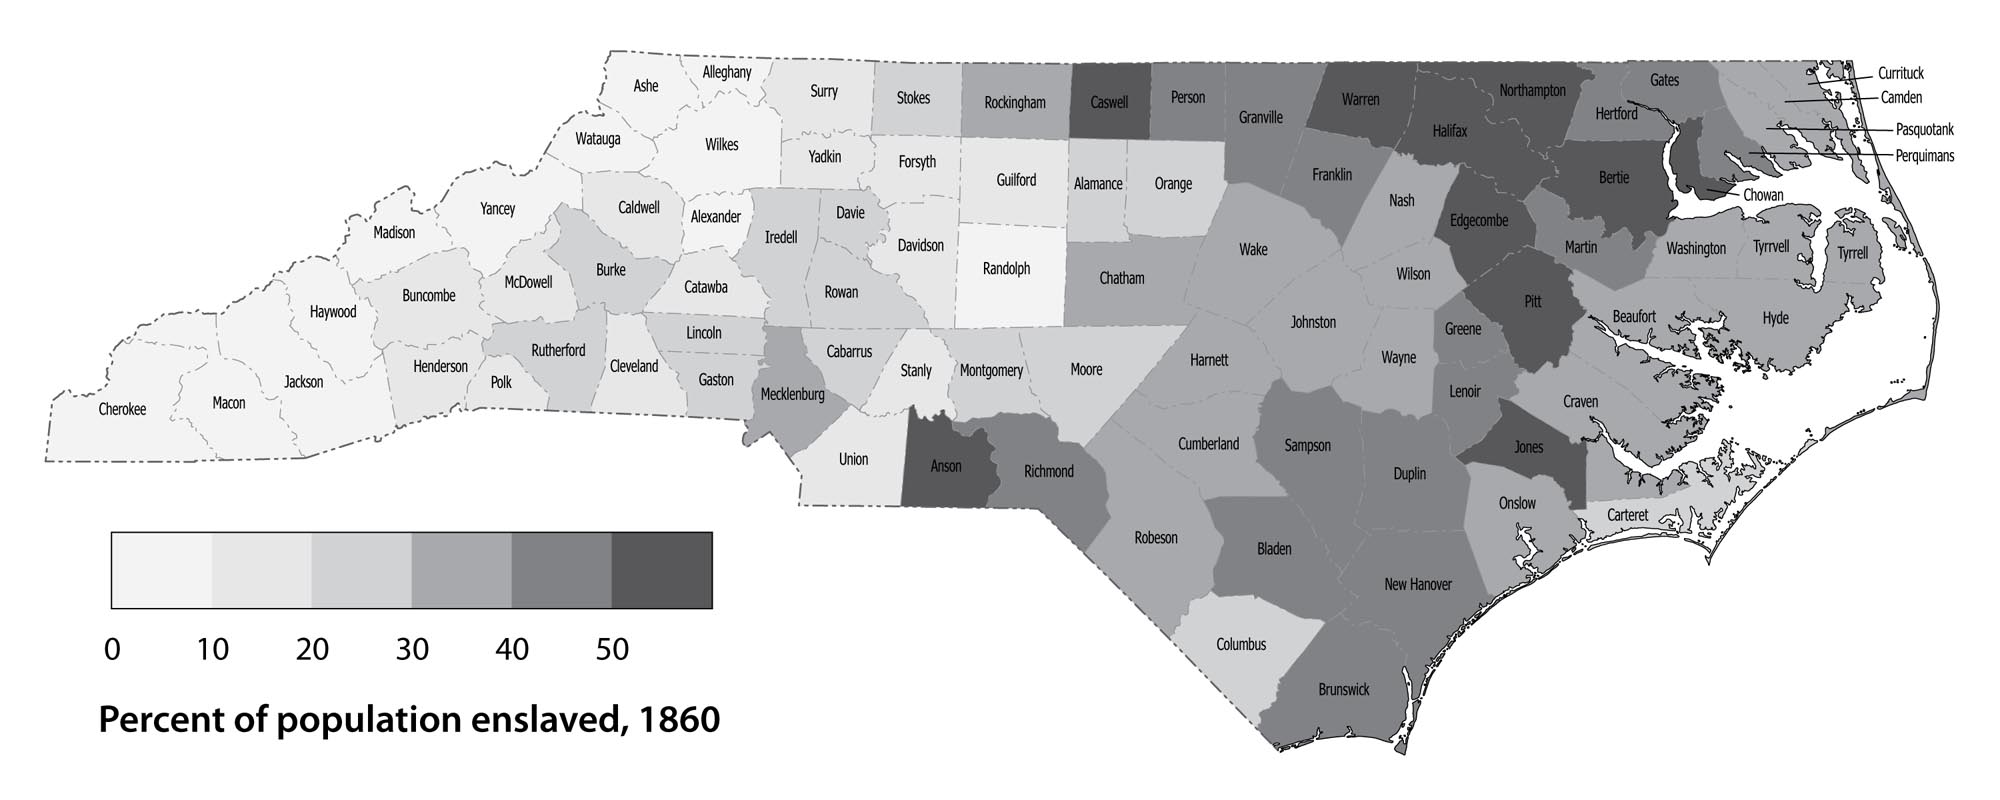 North Carolina population: Percent enslaved by county, 1860